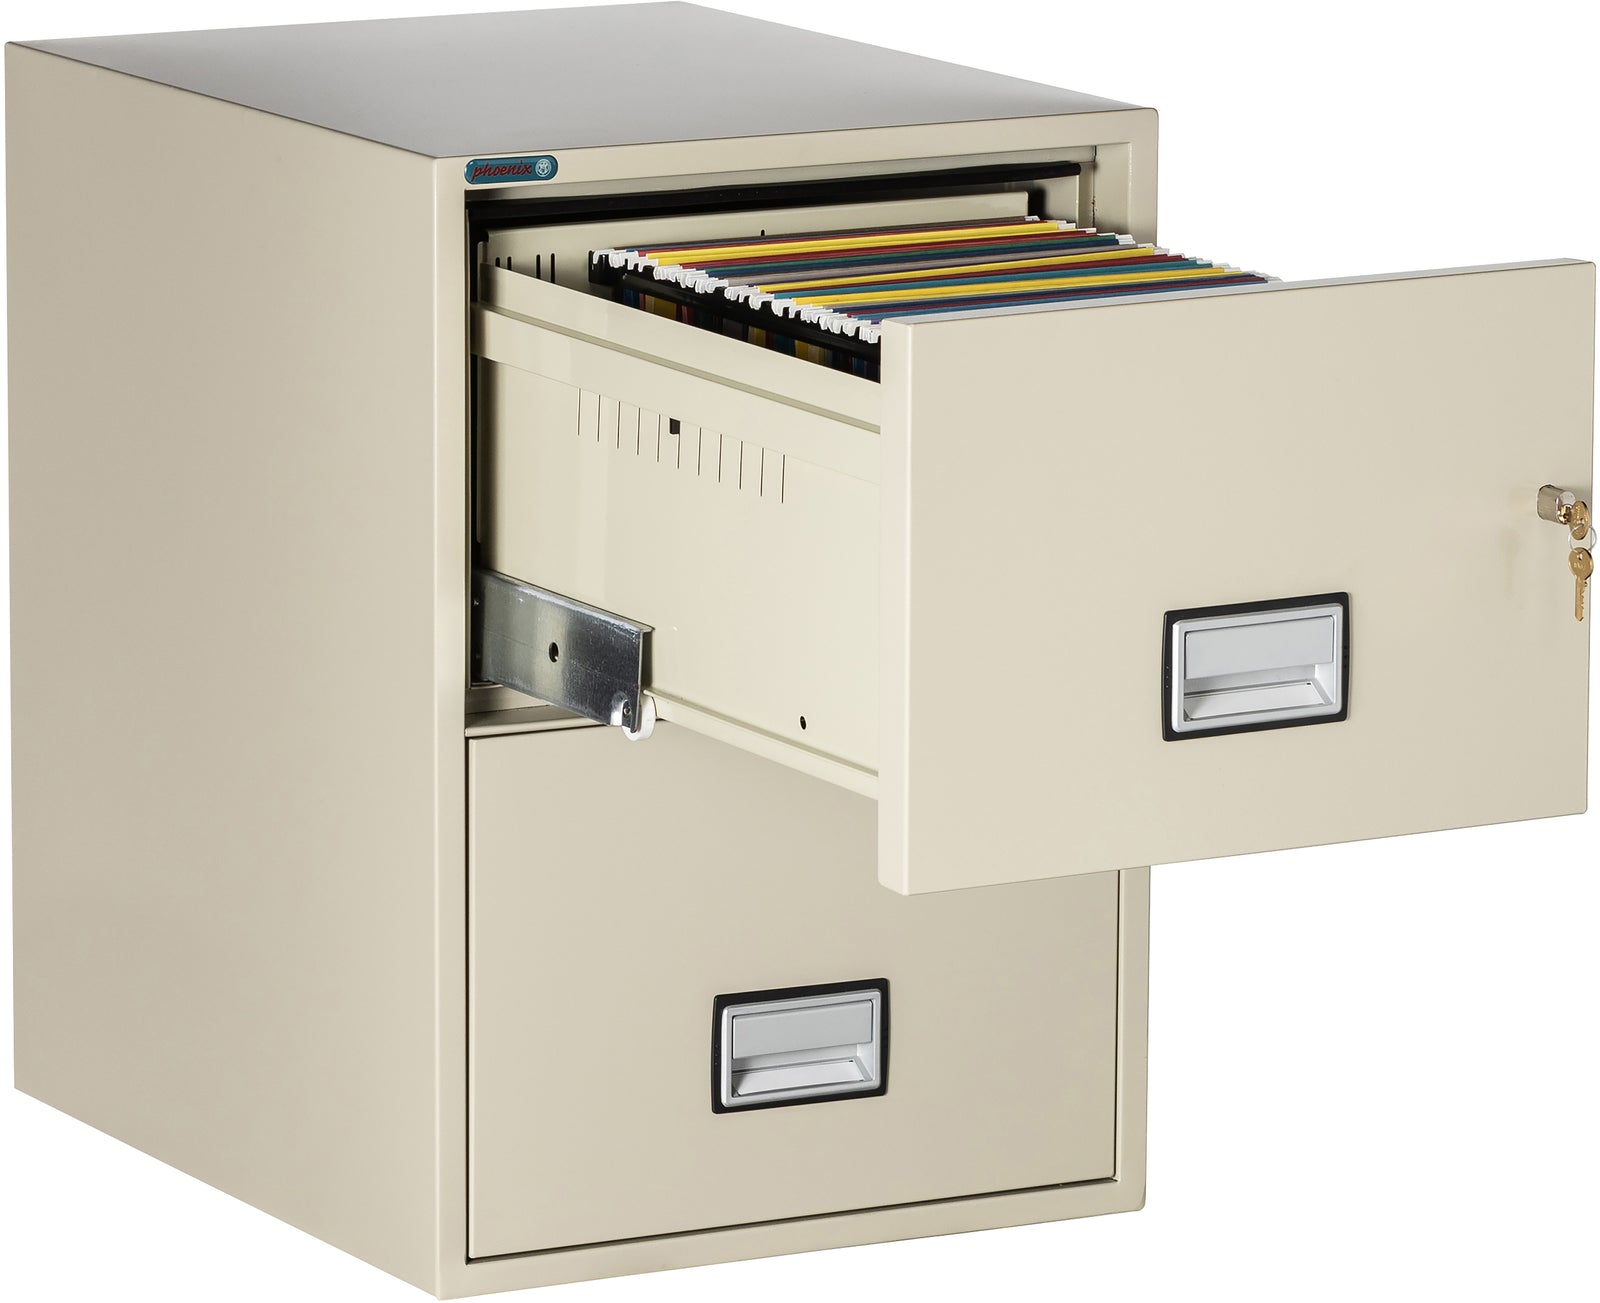 Phoenix Safe LGL2W25 25 inch 2 Drawer Legal Size Fire File Cabinet Putty